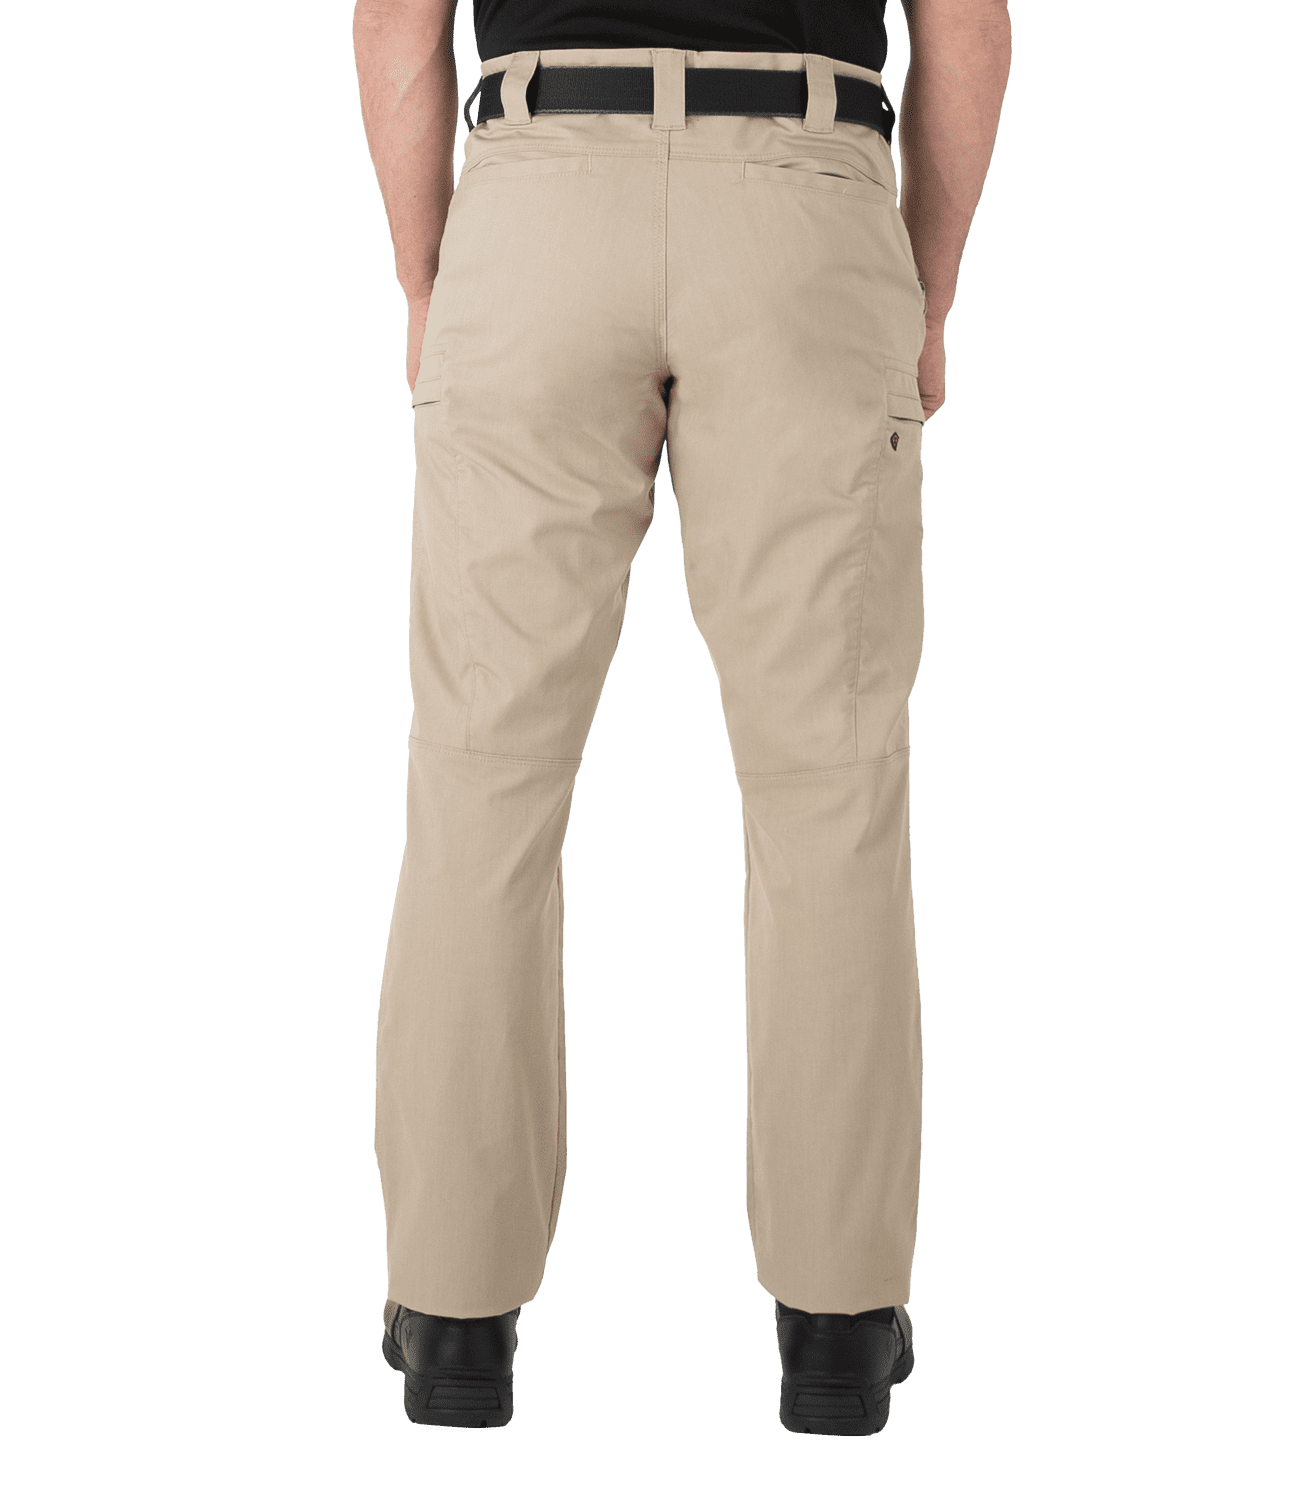 First Tactical Men's A2 Pant, Khaki - COPS Products